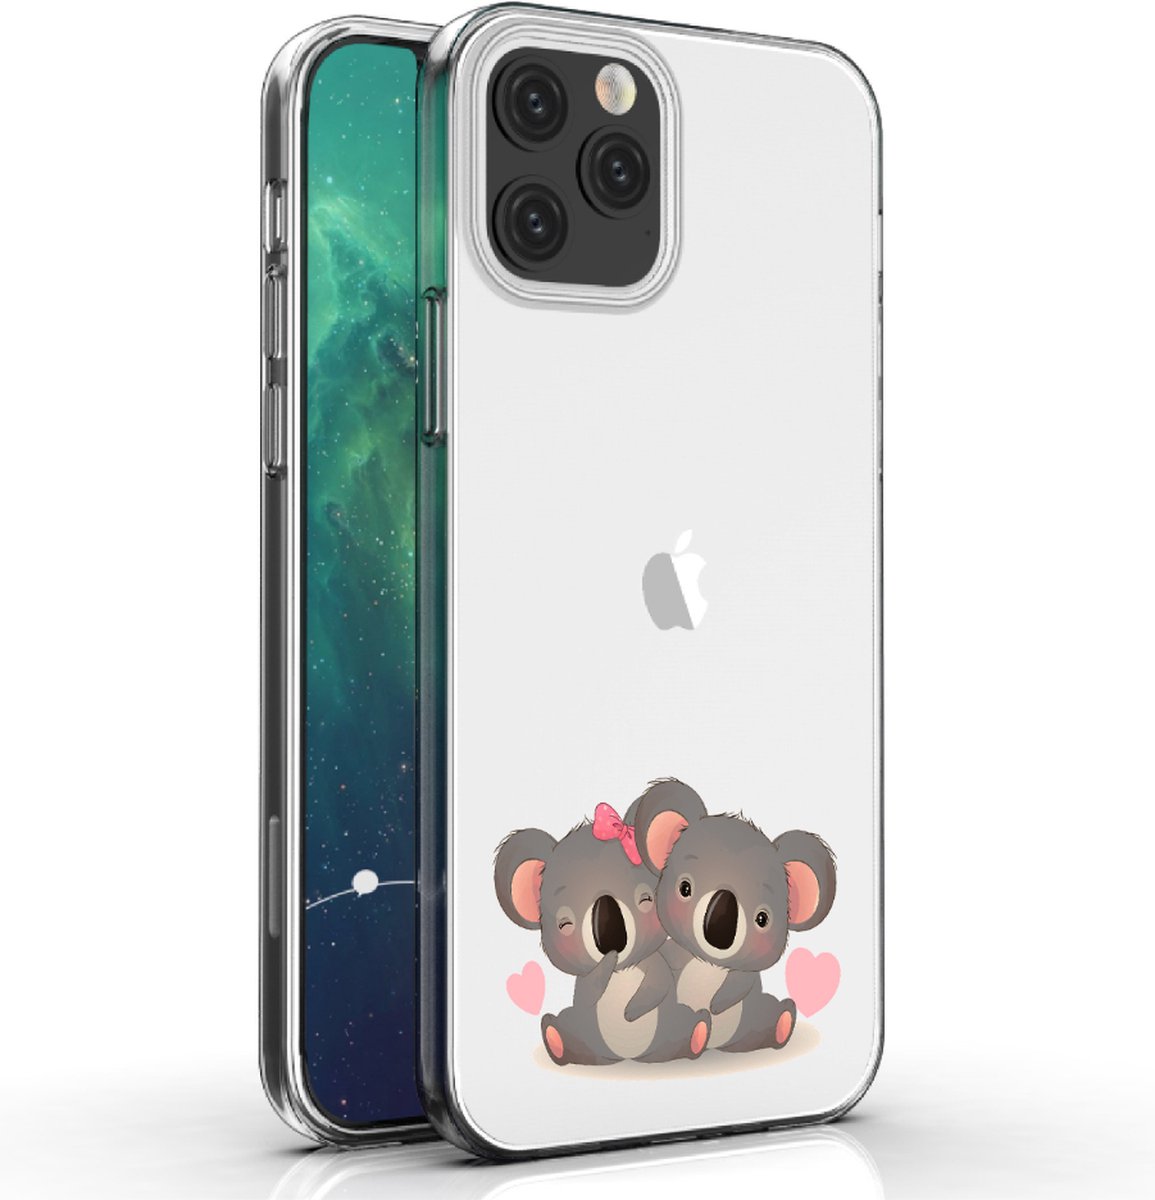 Apple Iphone 12 Pro Max telefoonhoesje transparant siliconen hoesje - Koalabeertjes